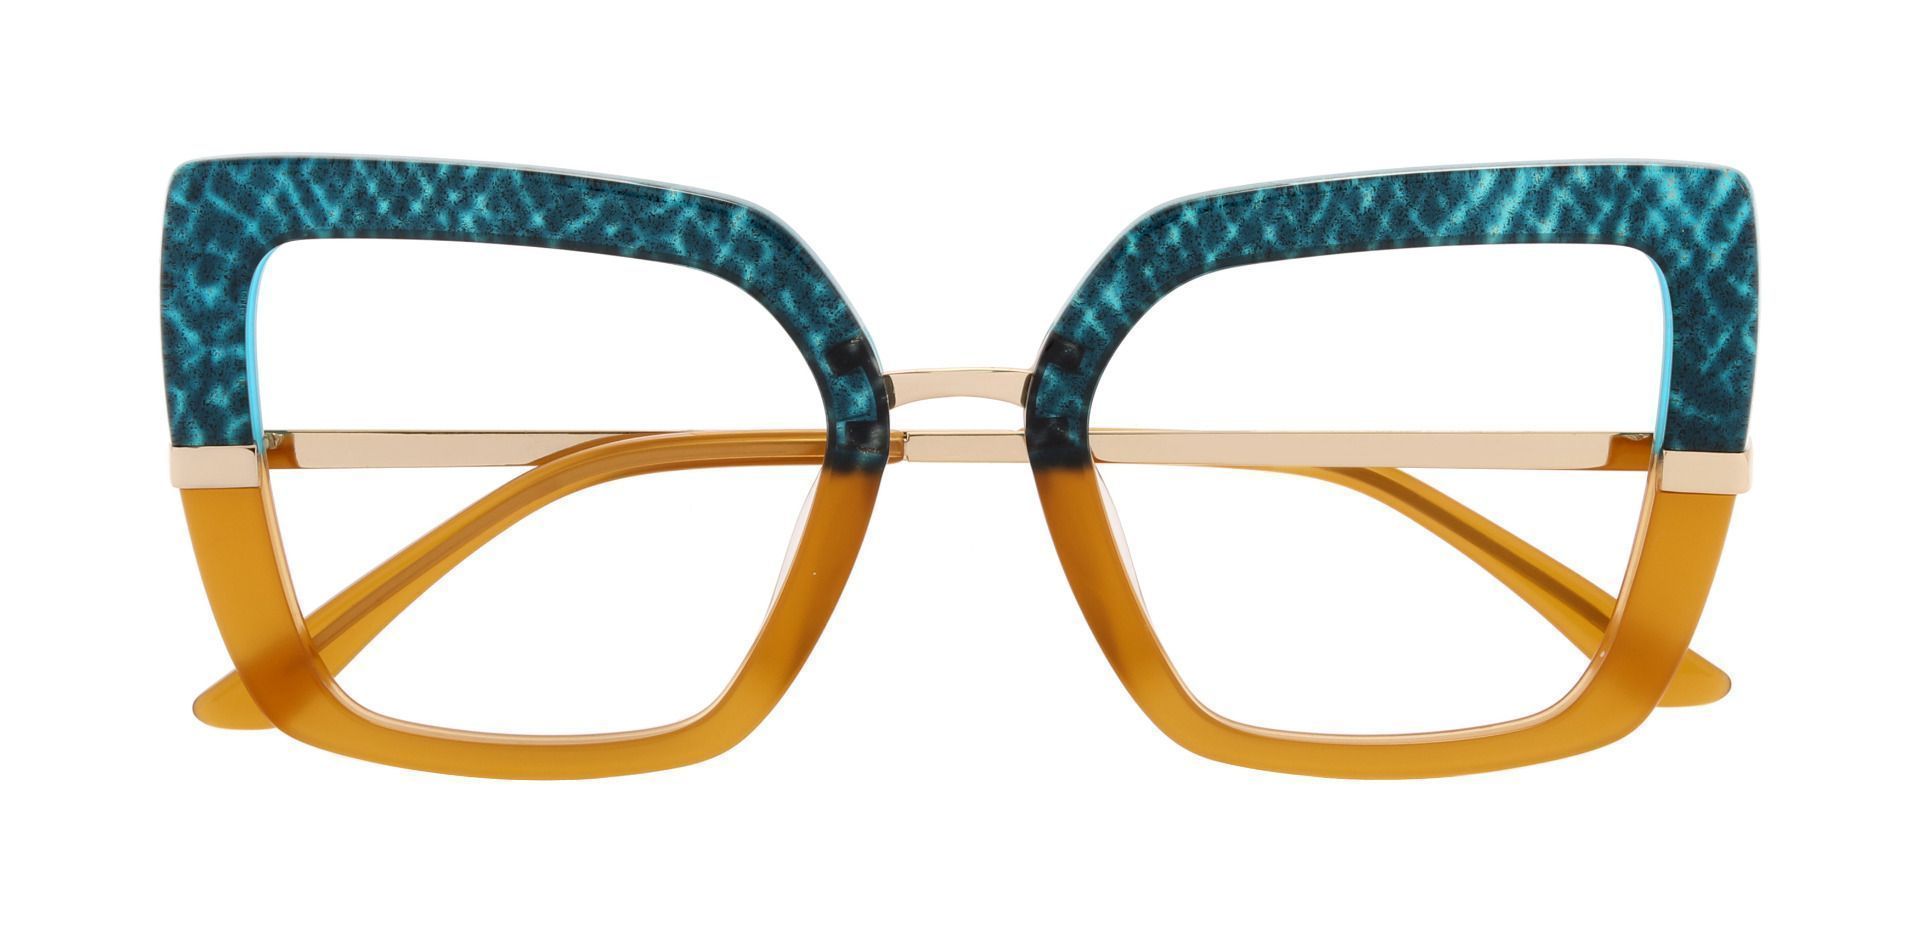 Tokyo Geometric Prescription Glasses - Two